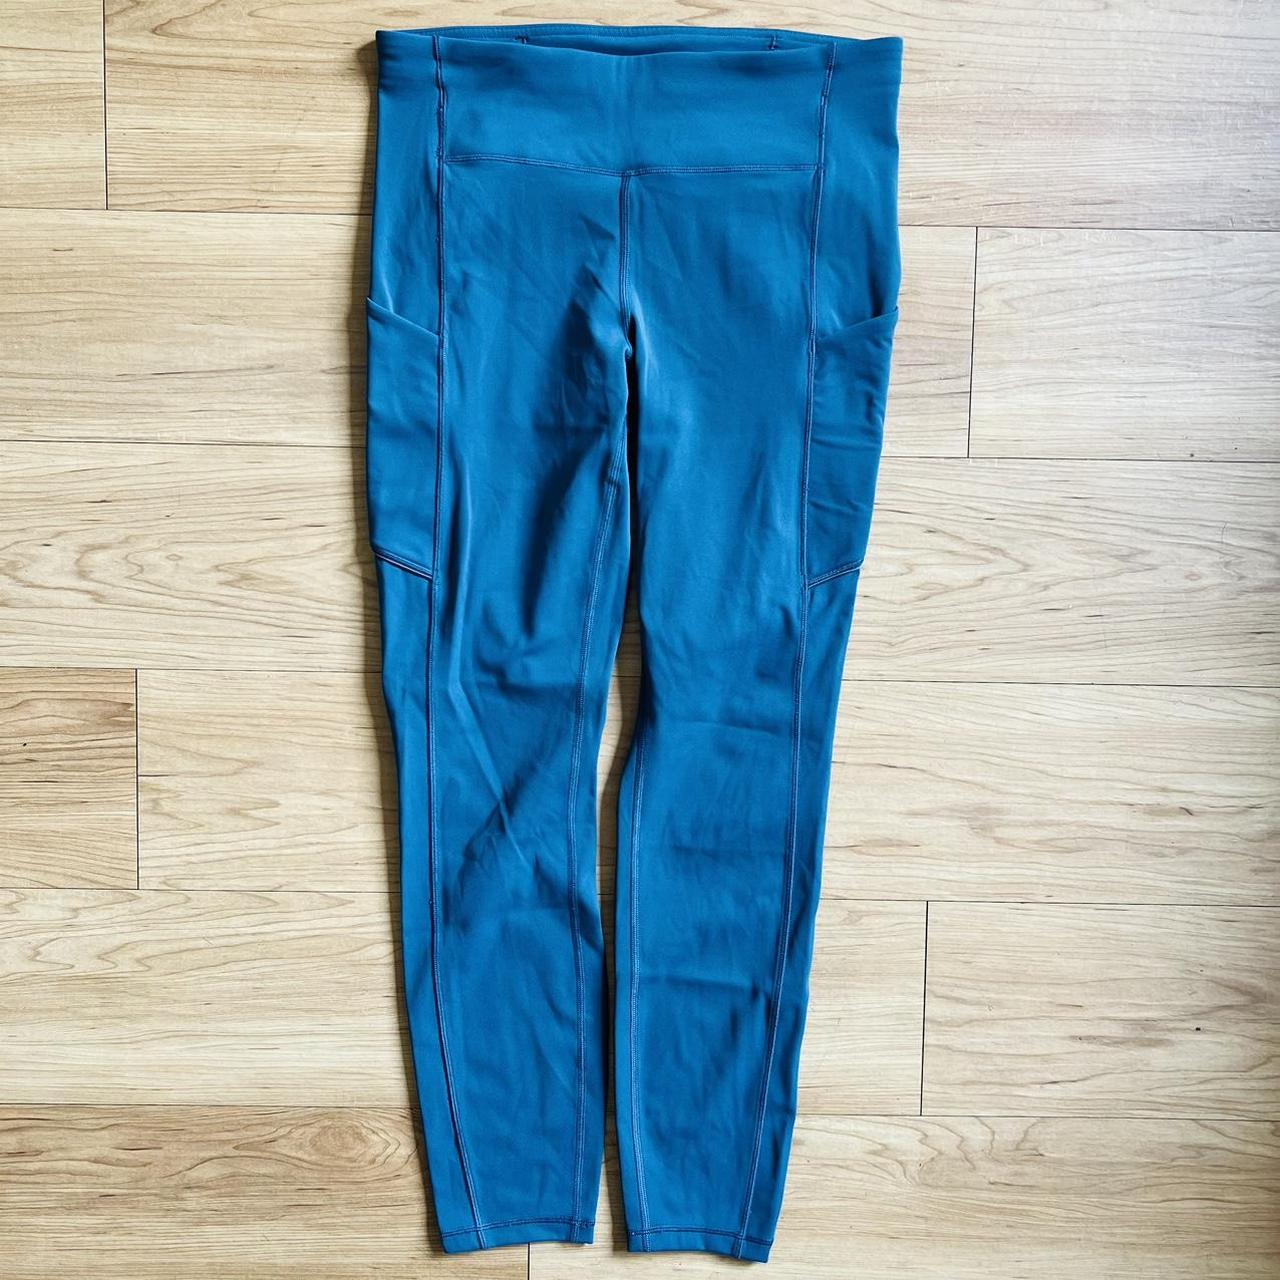 Lululemon women's leggings Size 6 Zip Pocket - Depop